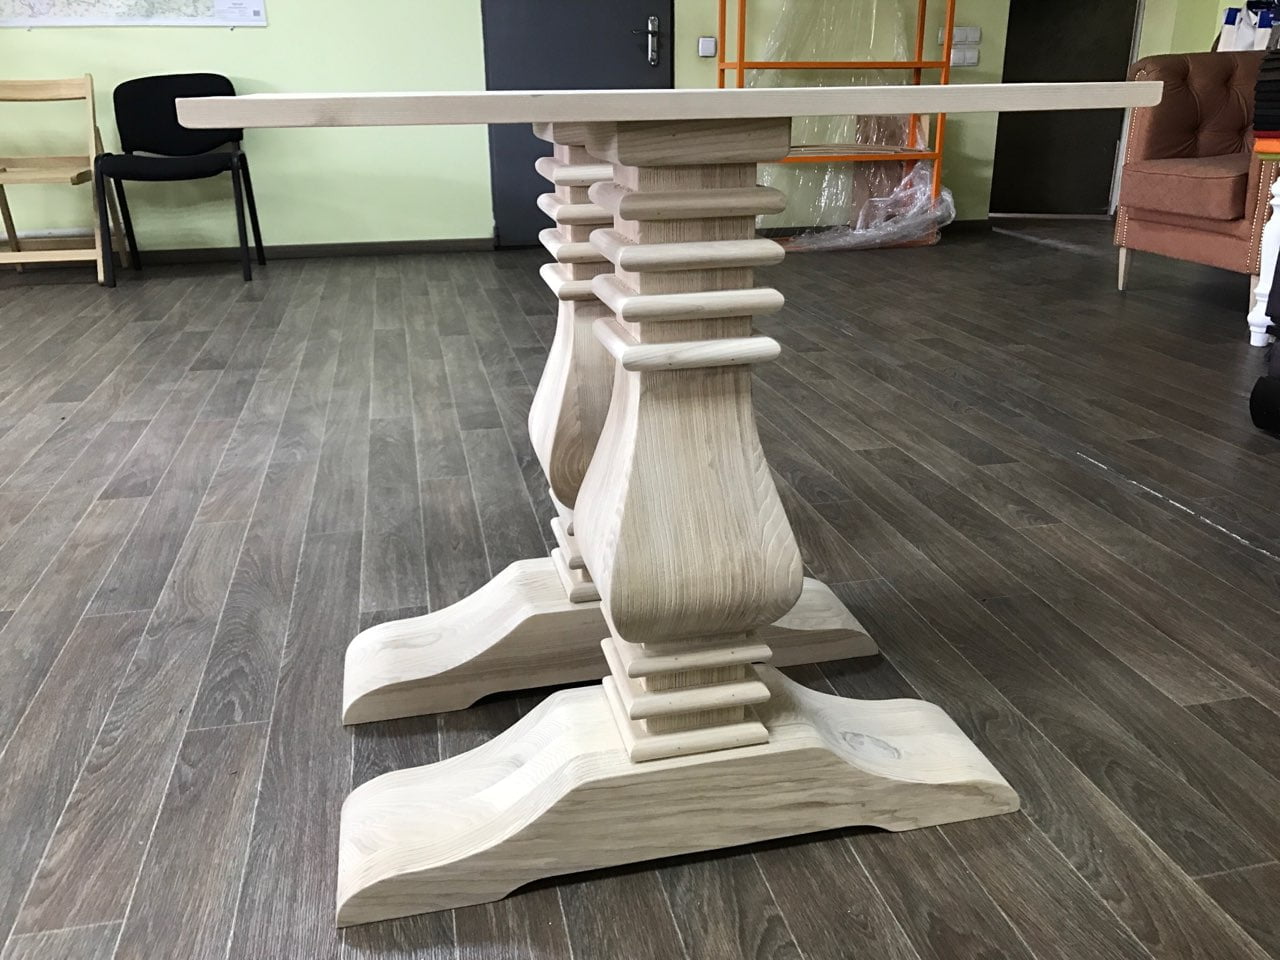 menards wood kitchen table legs